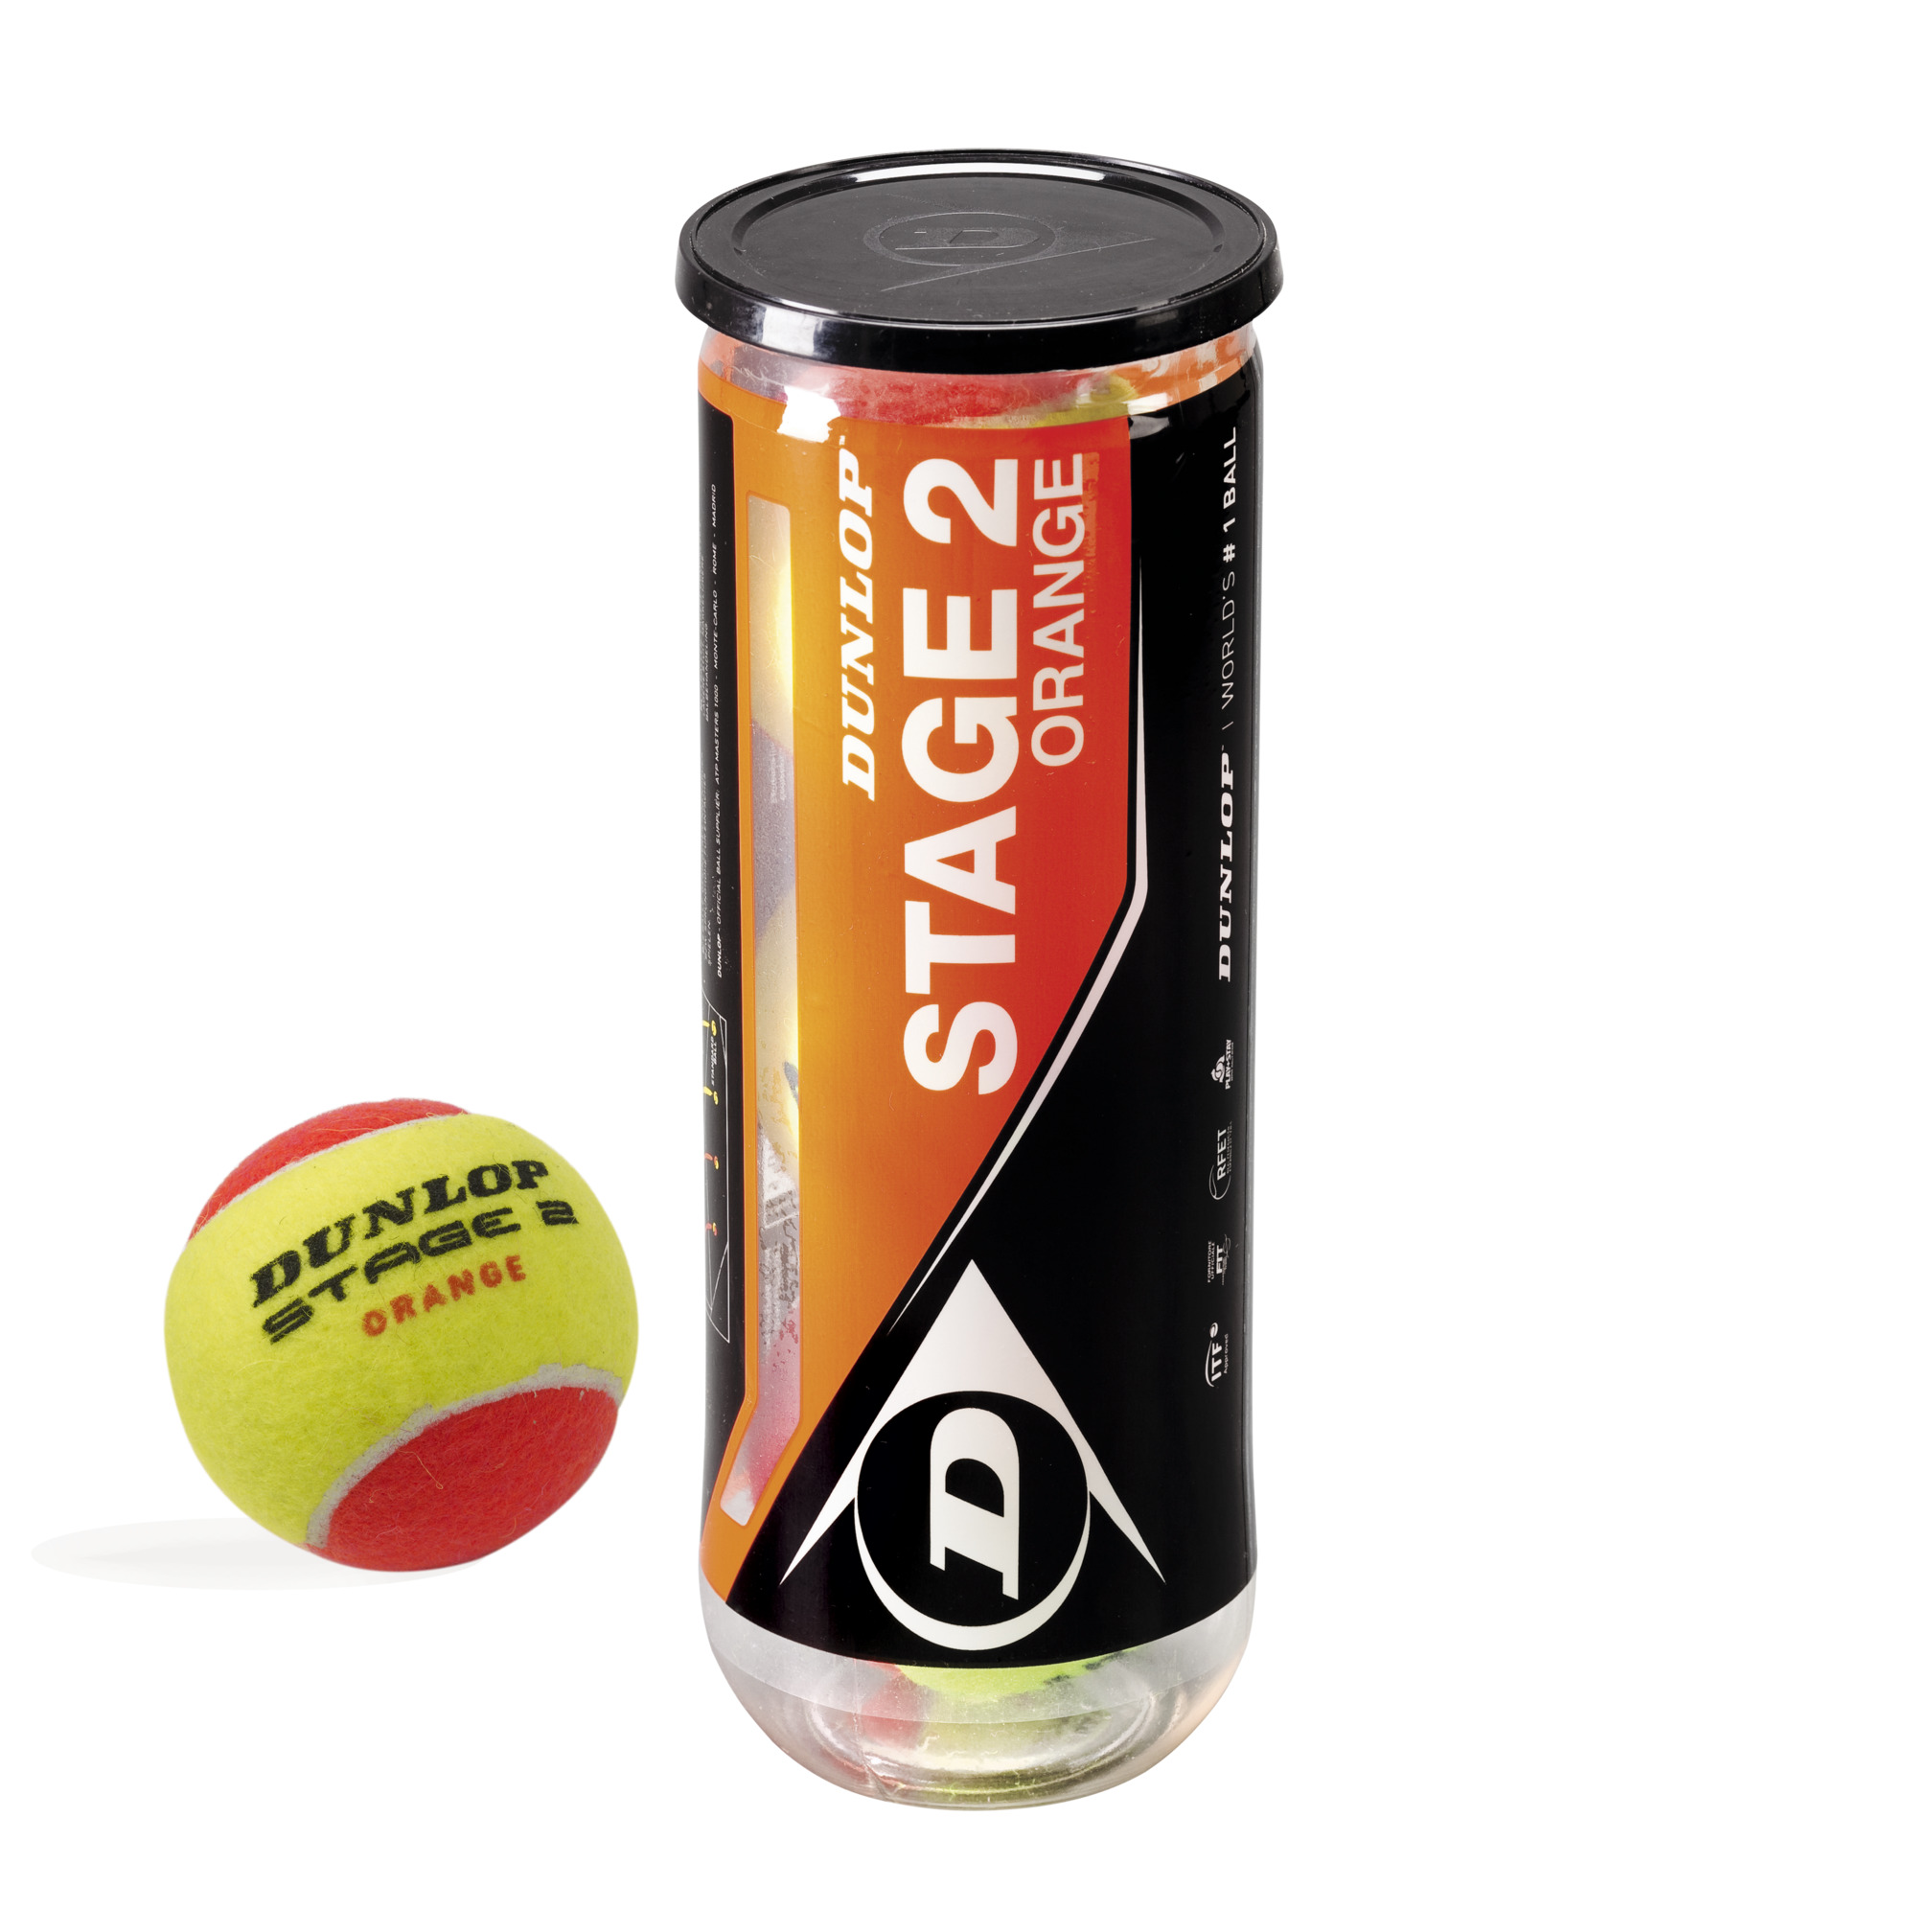 Dunlop training tennis ball, Stage 2